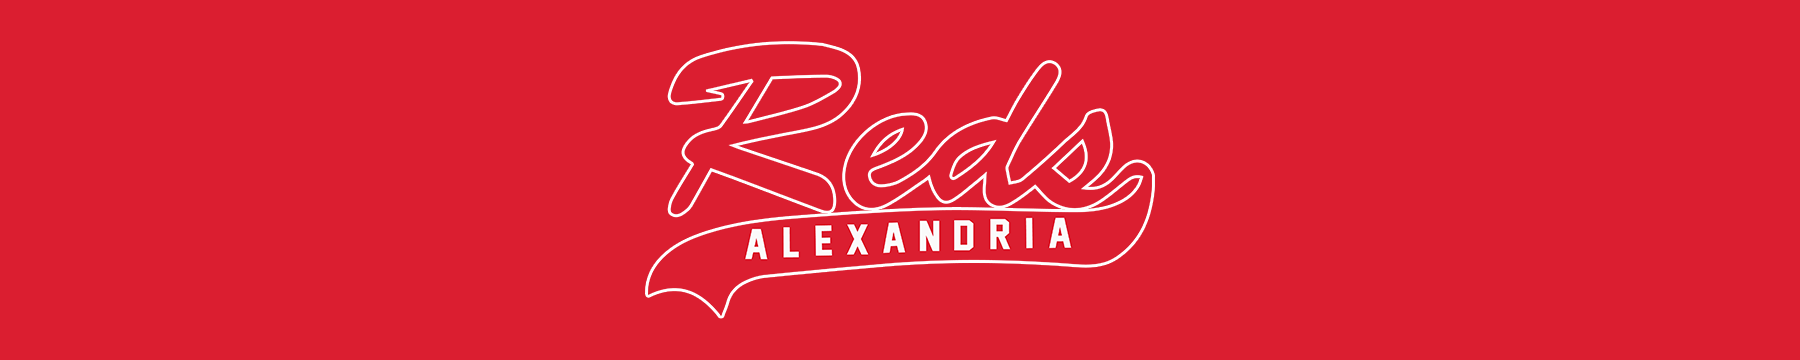 Alexandria Reds Baseball